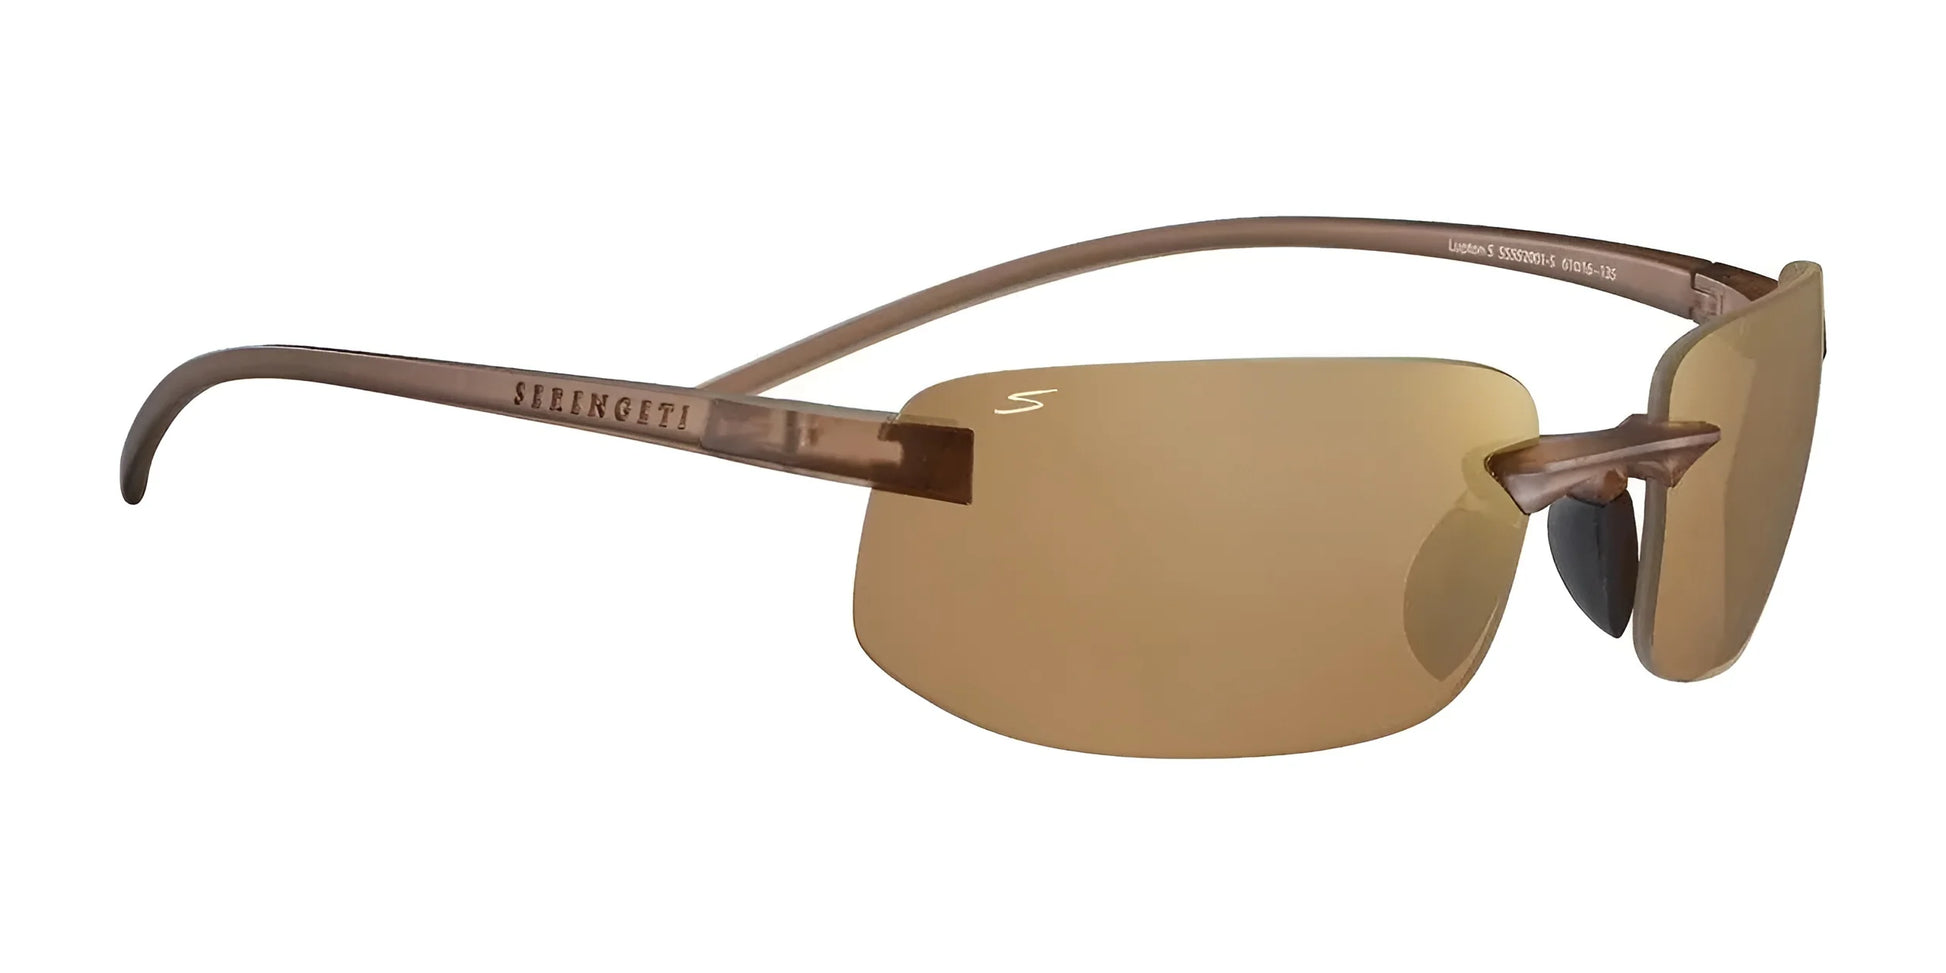 Serengeti Lupton Sunglasses Matte Crystal Light Brown / PhD 2.0 Drivers Gold